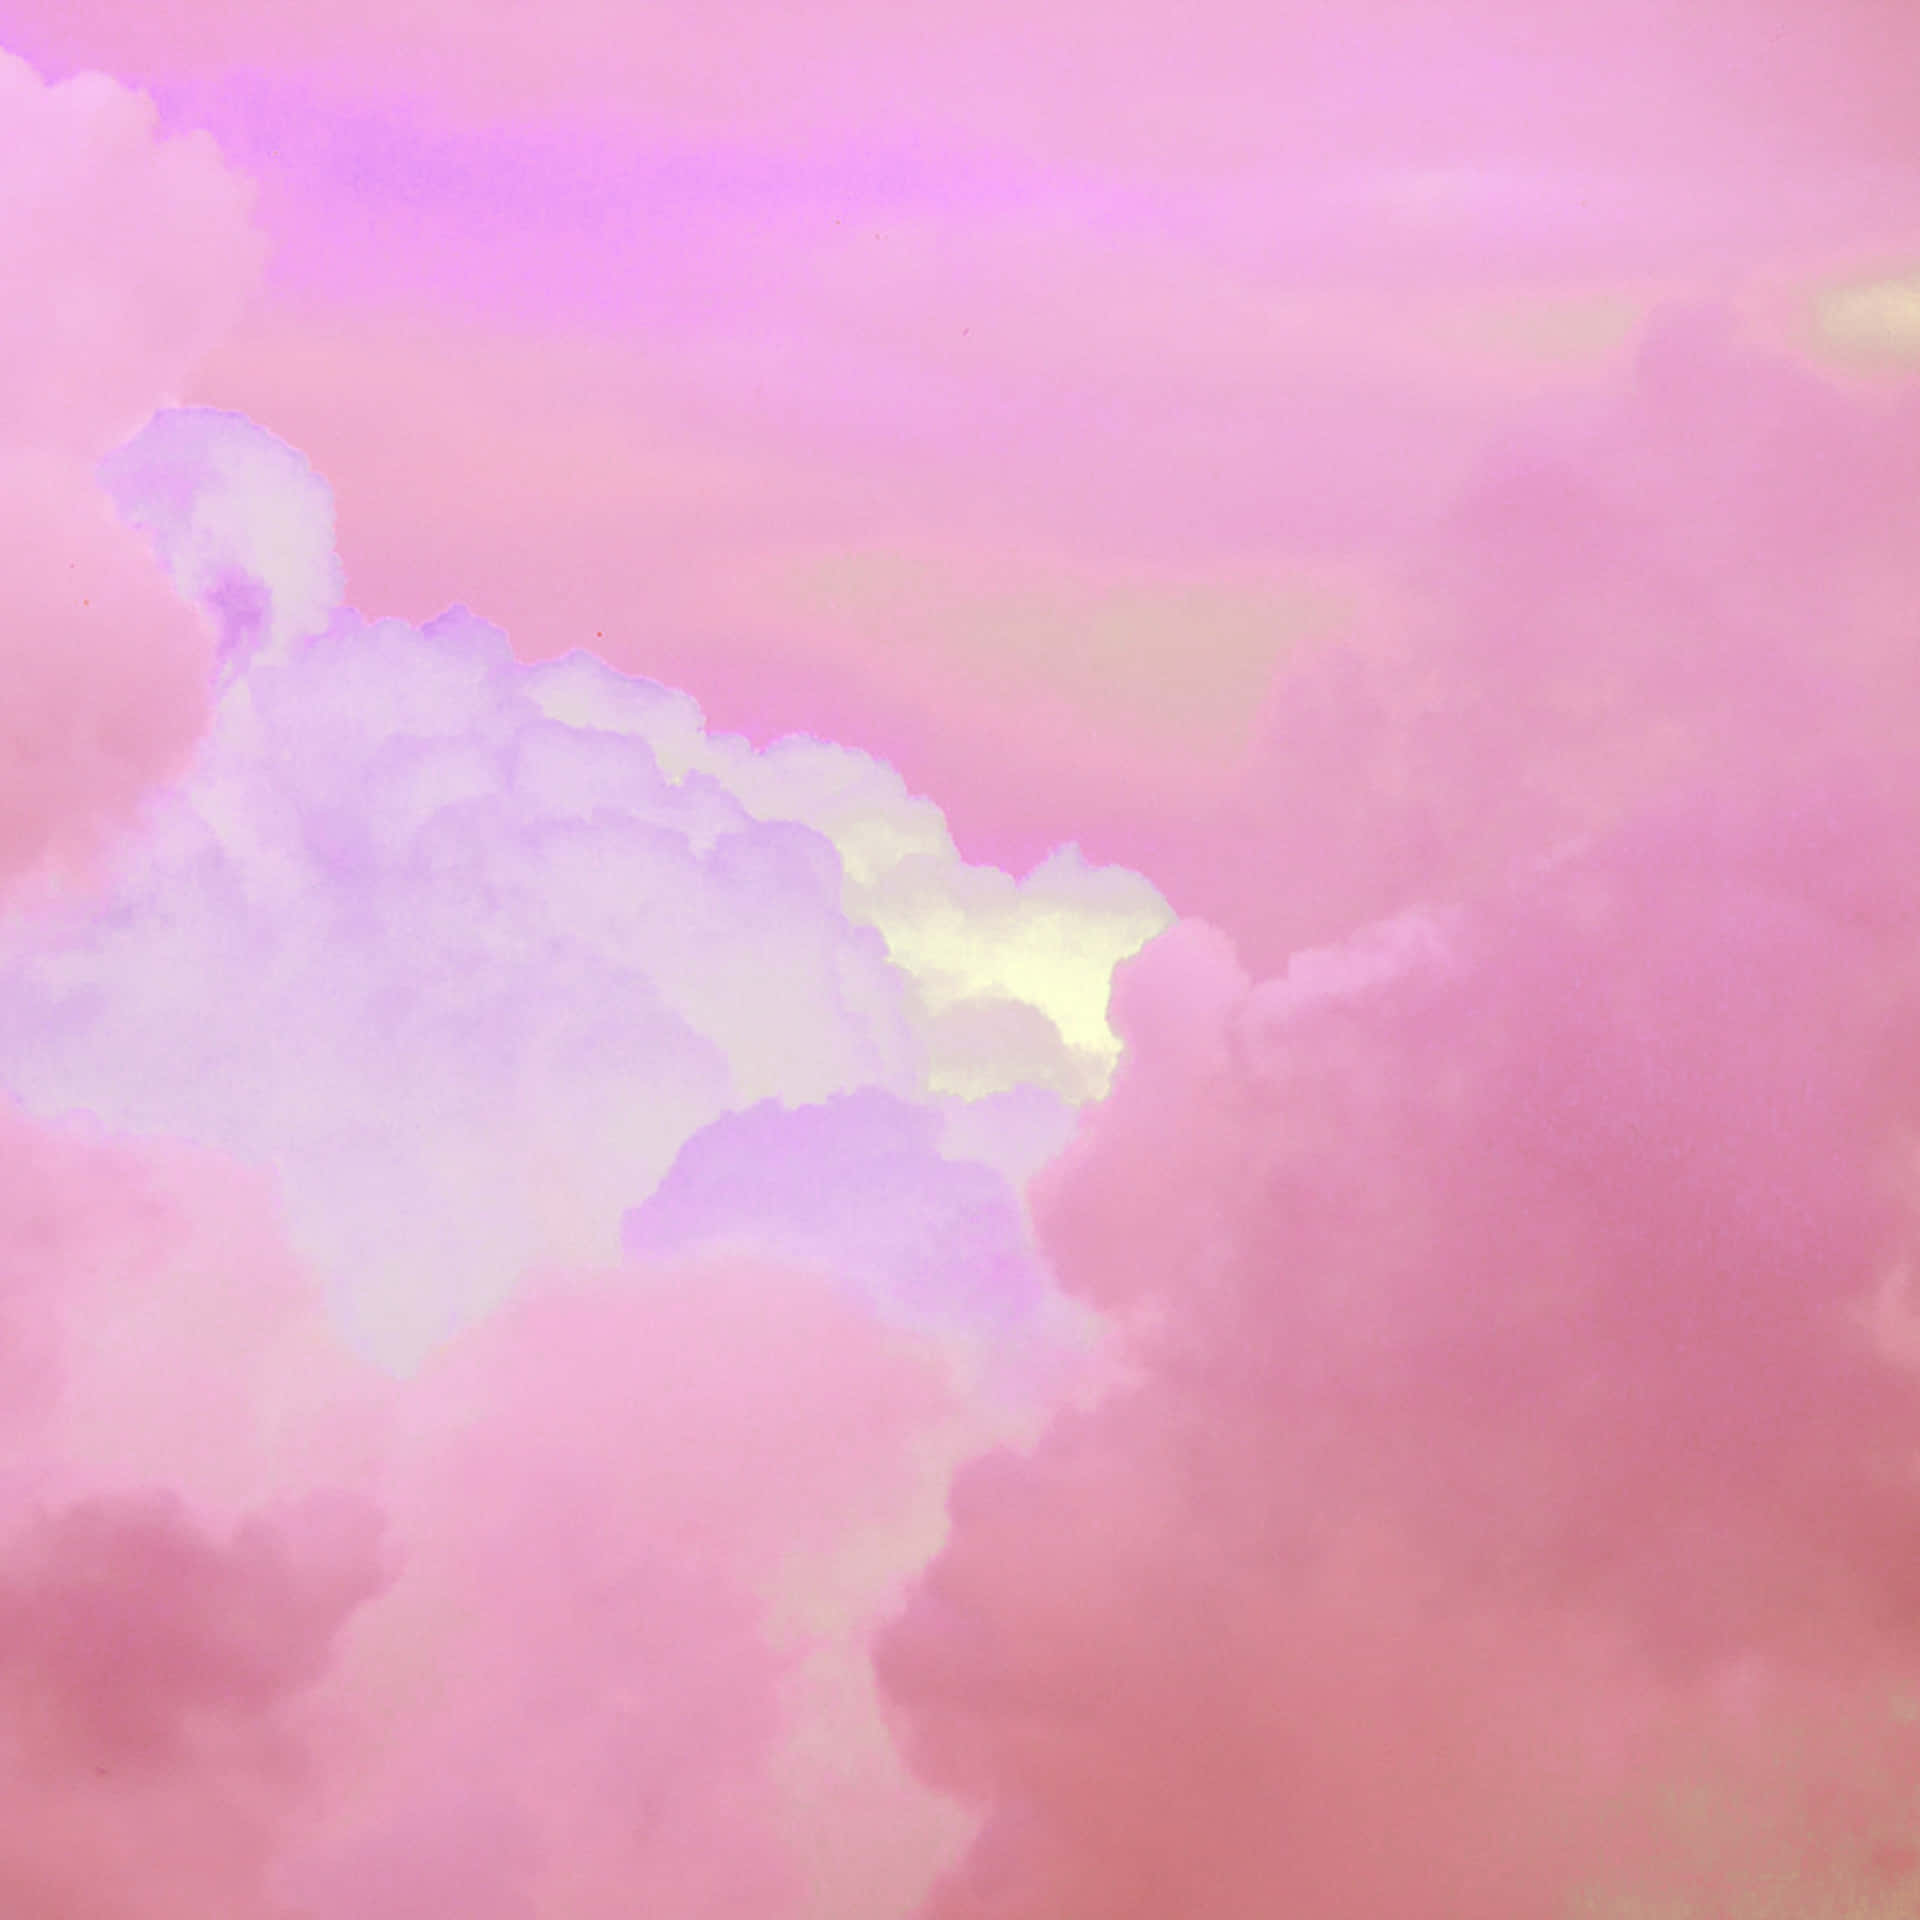 Pink Ipad Pro Clouds Wallpaper